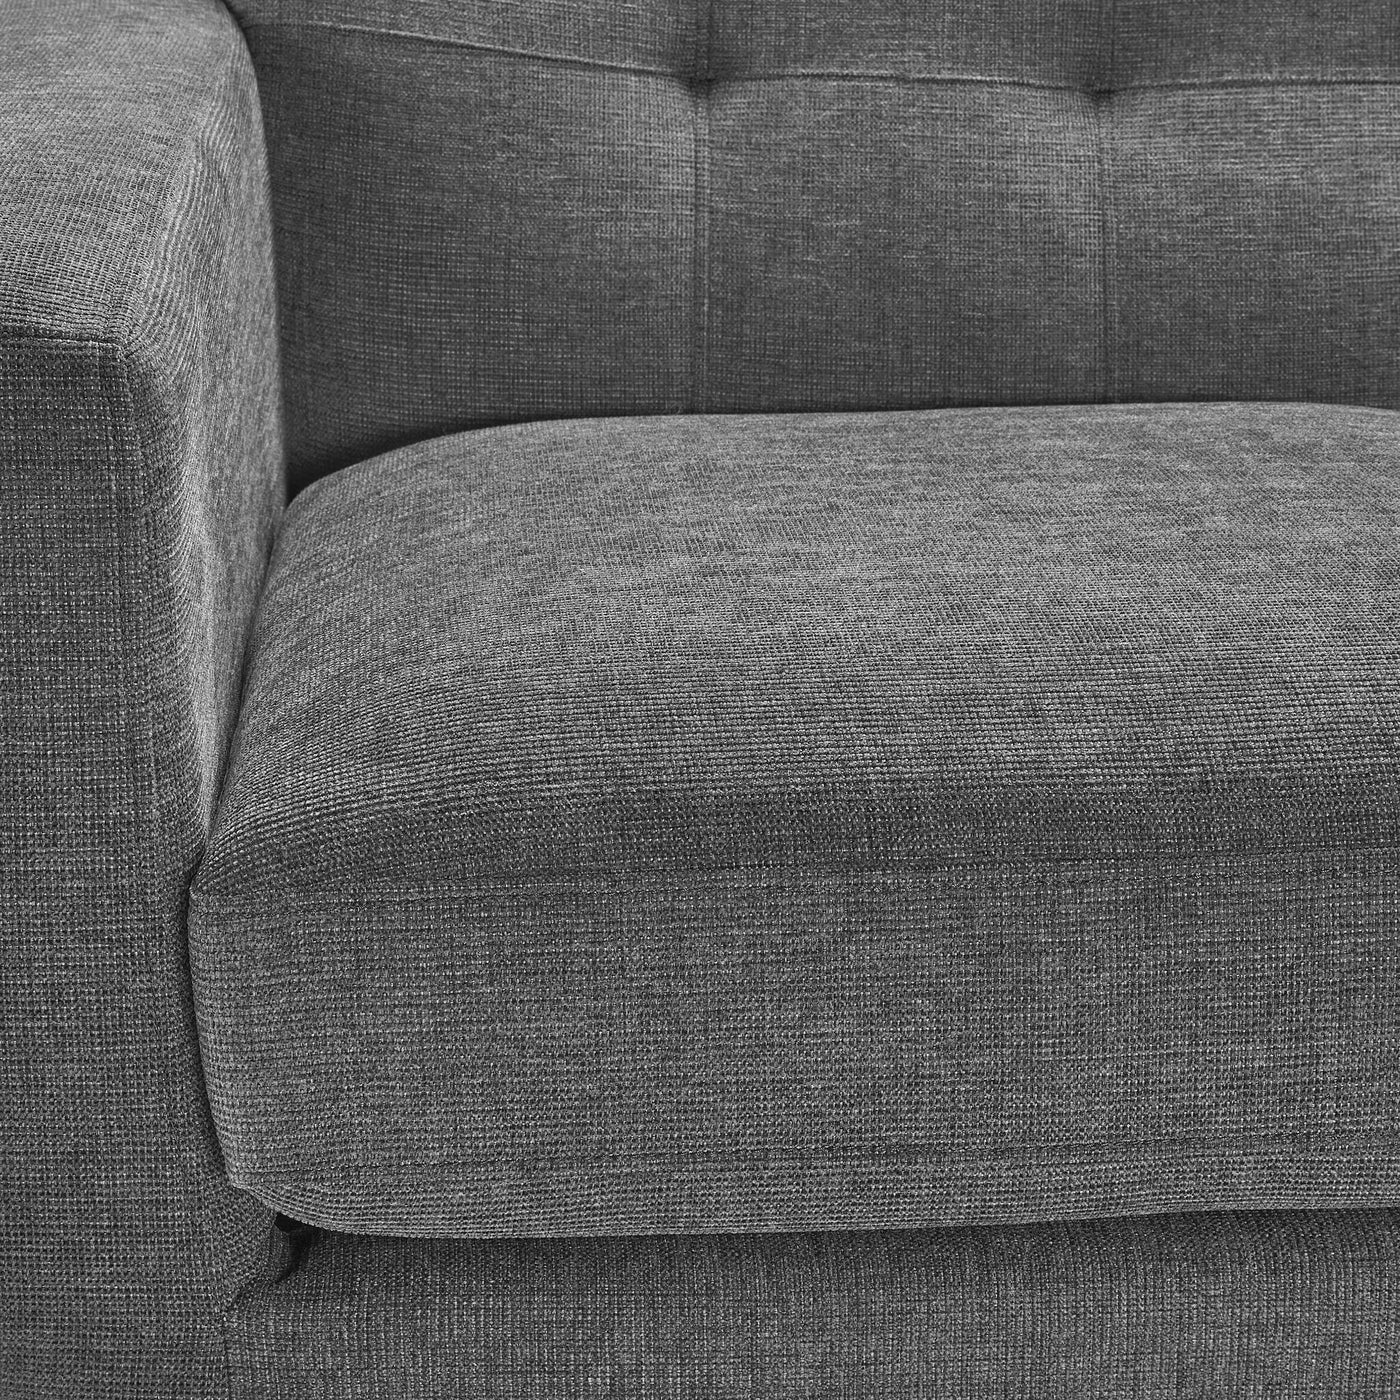 Ziva Chair - Grey